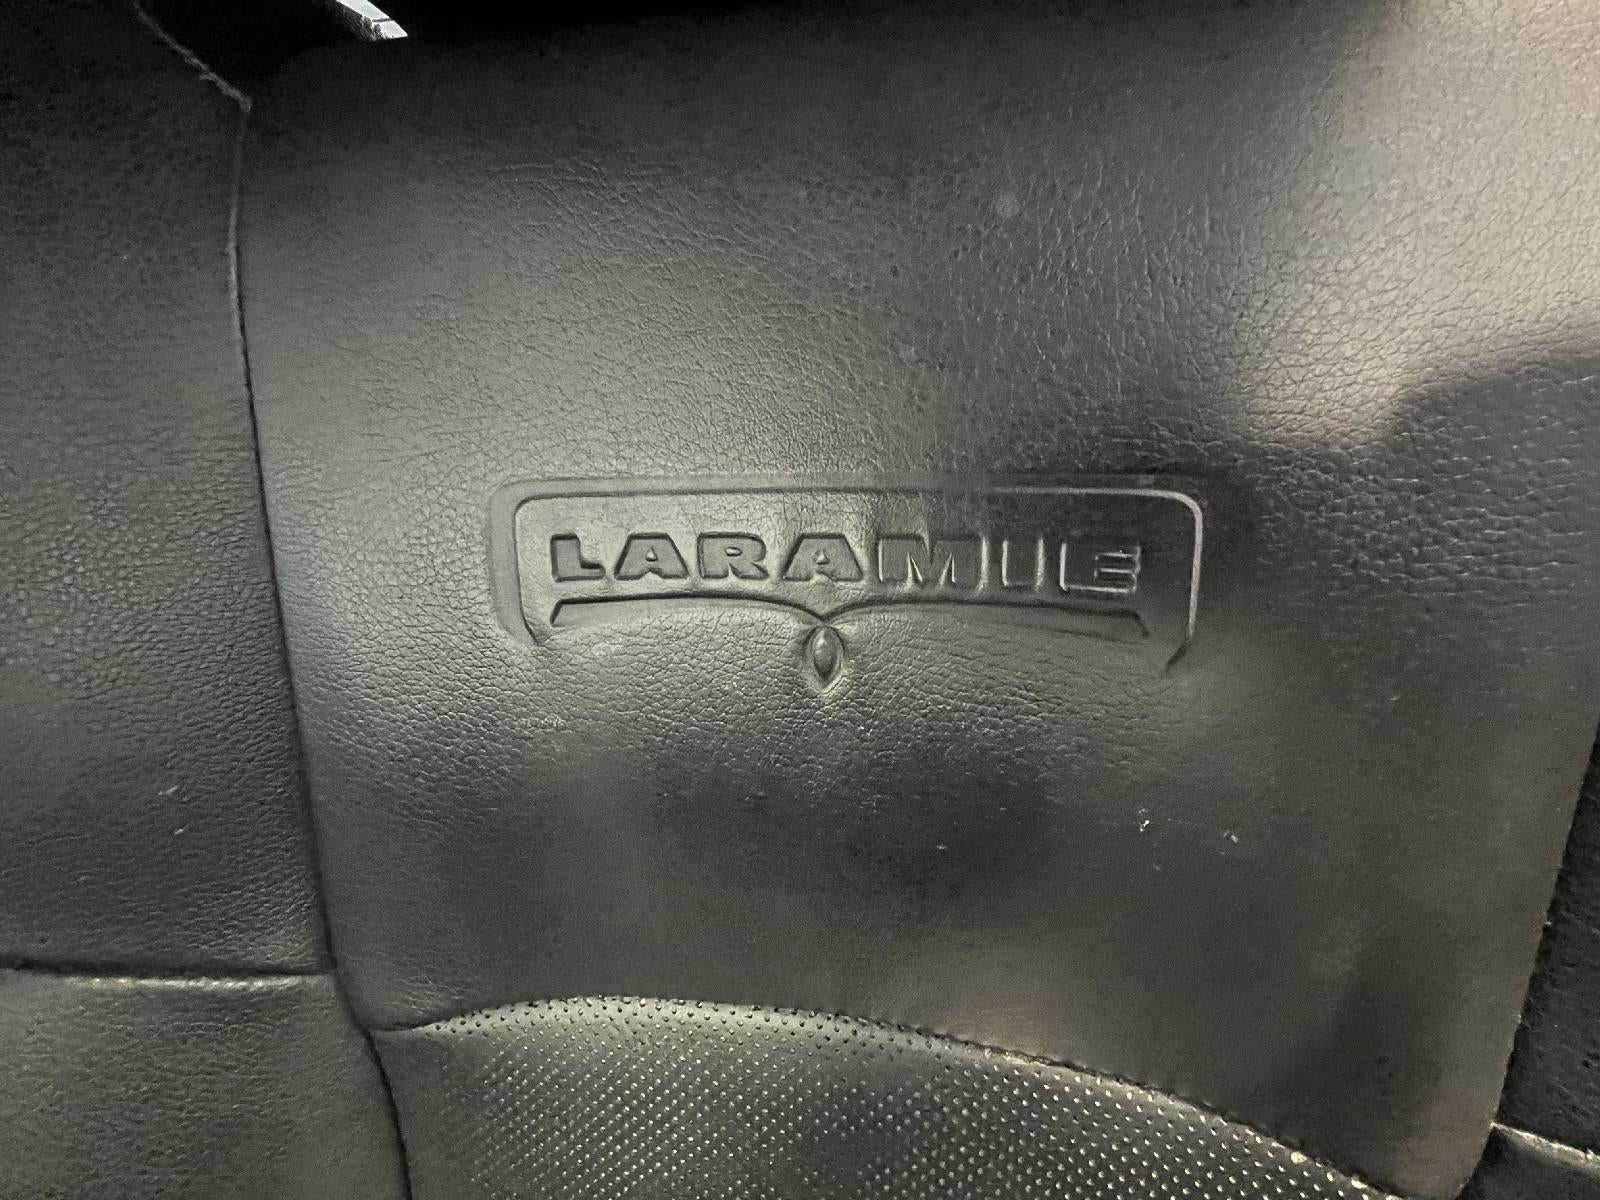 2017 RAM 1500 Laramie Crew Cab 4x4 5'7' Box